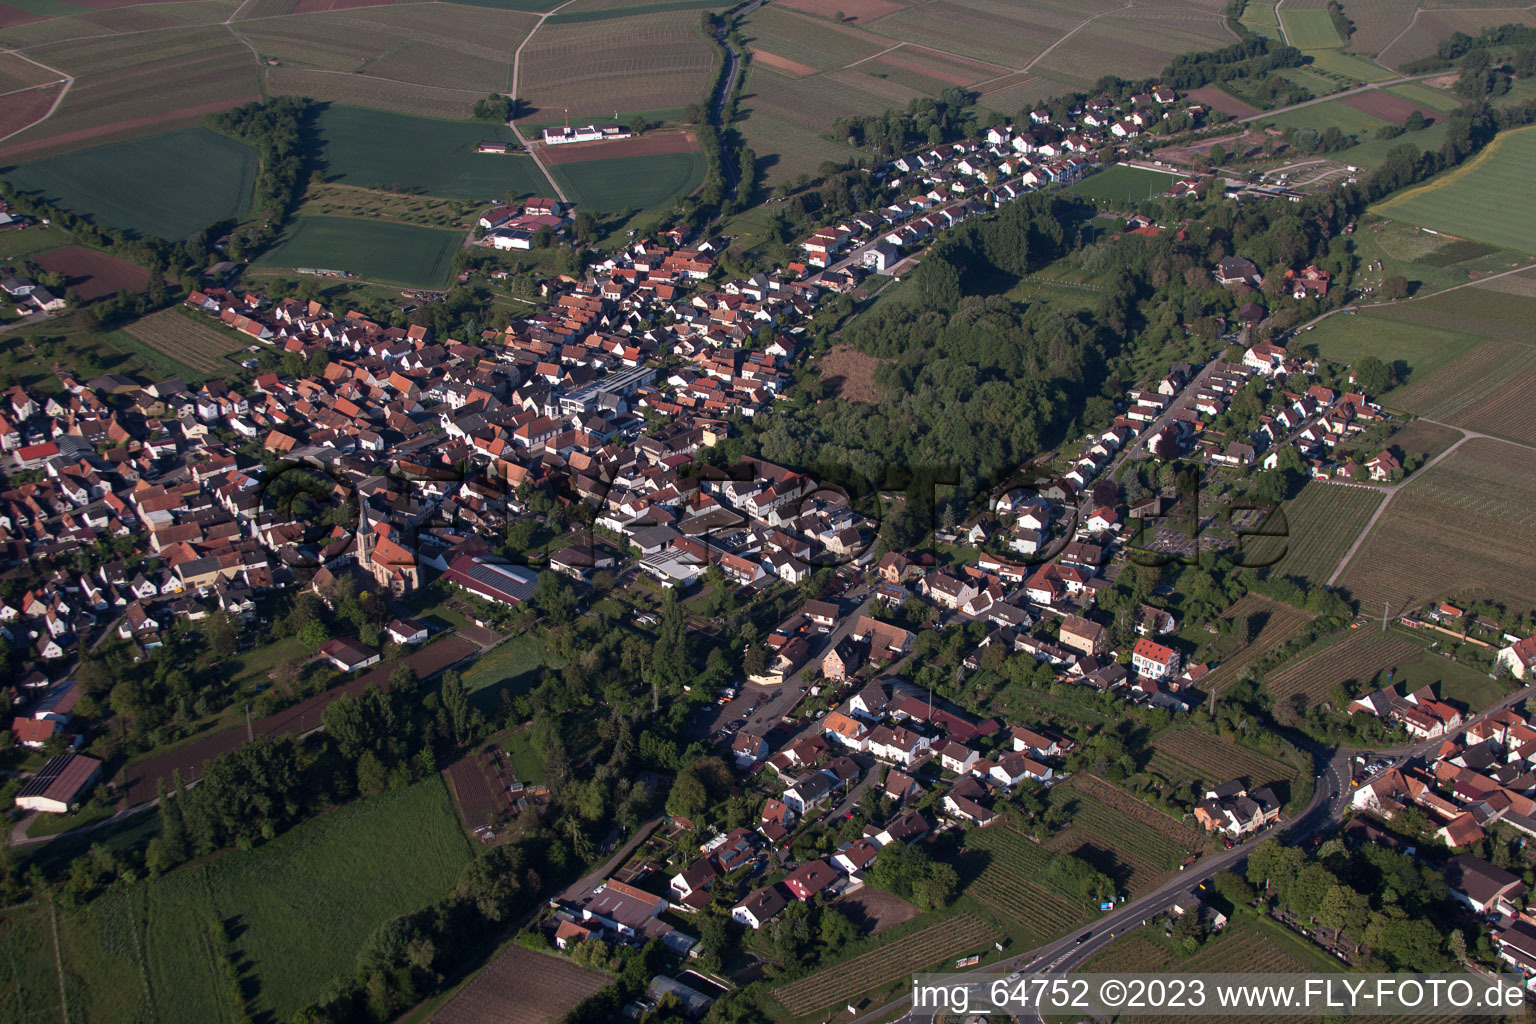 Oblique view of District Ingenheim in Billigheim-Ingenheim in the state Rhineland-Palatinate, Germany